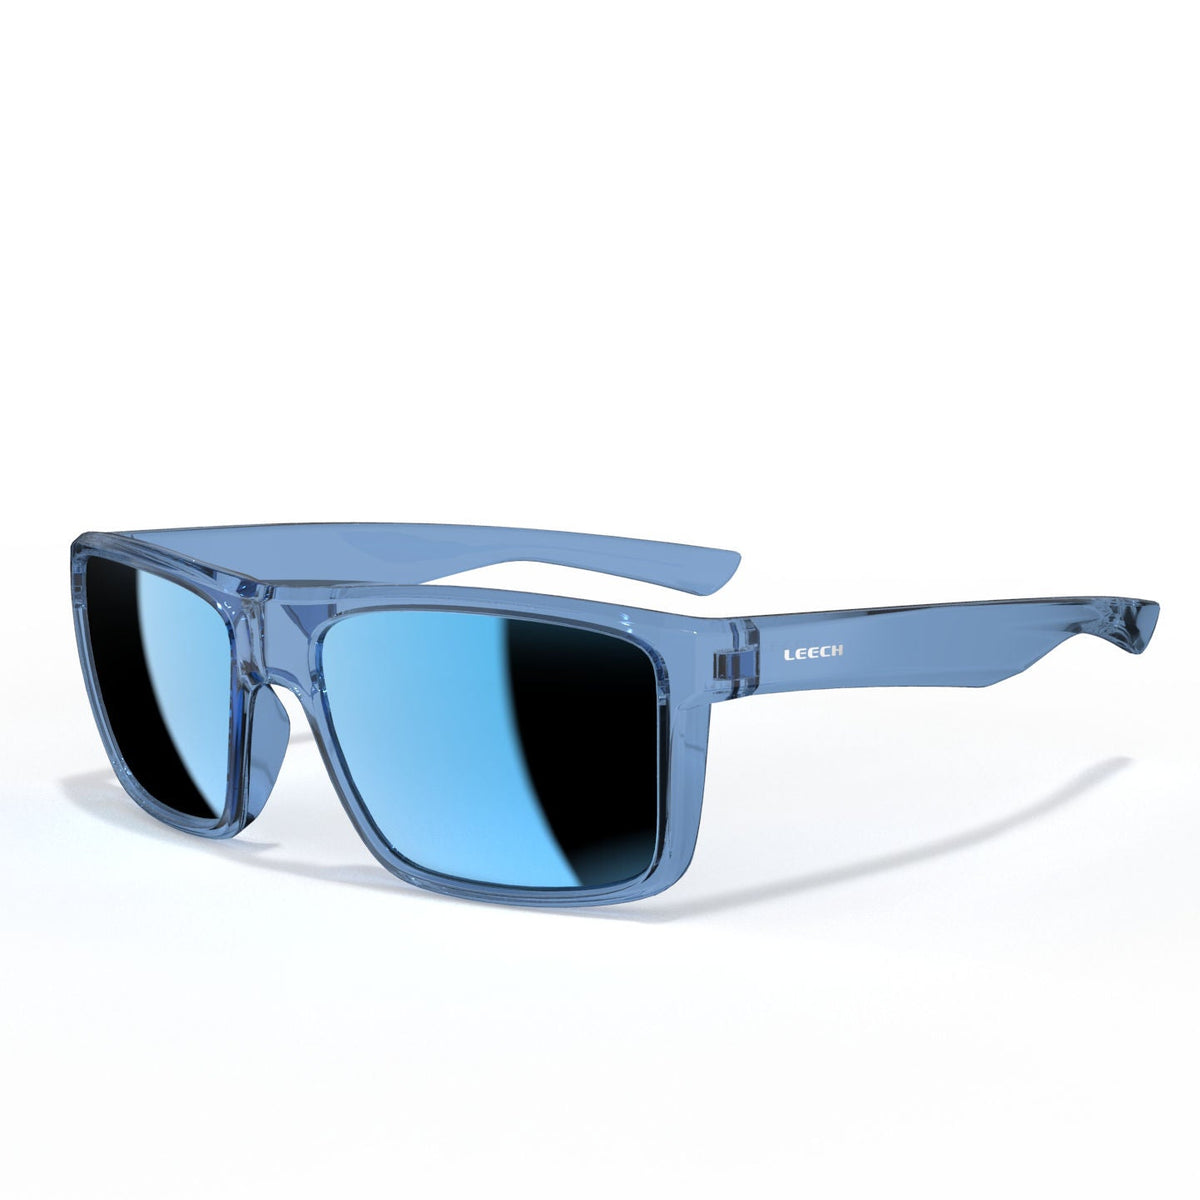 Leech Eyewear X7 X7 OCEAN Sunglasses